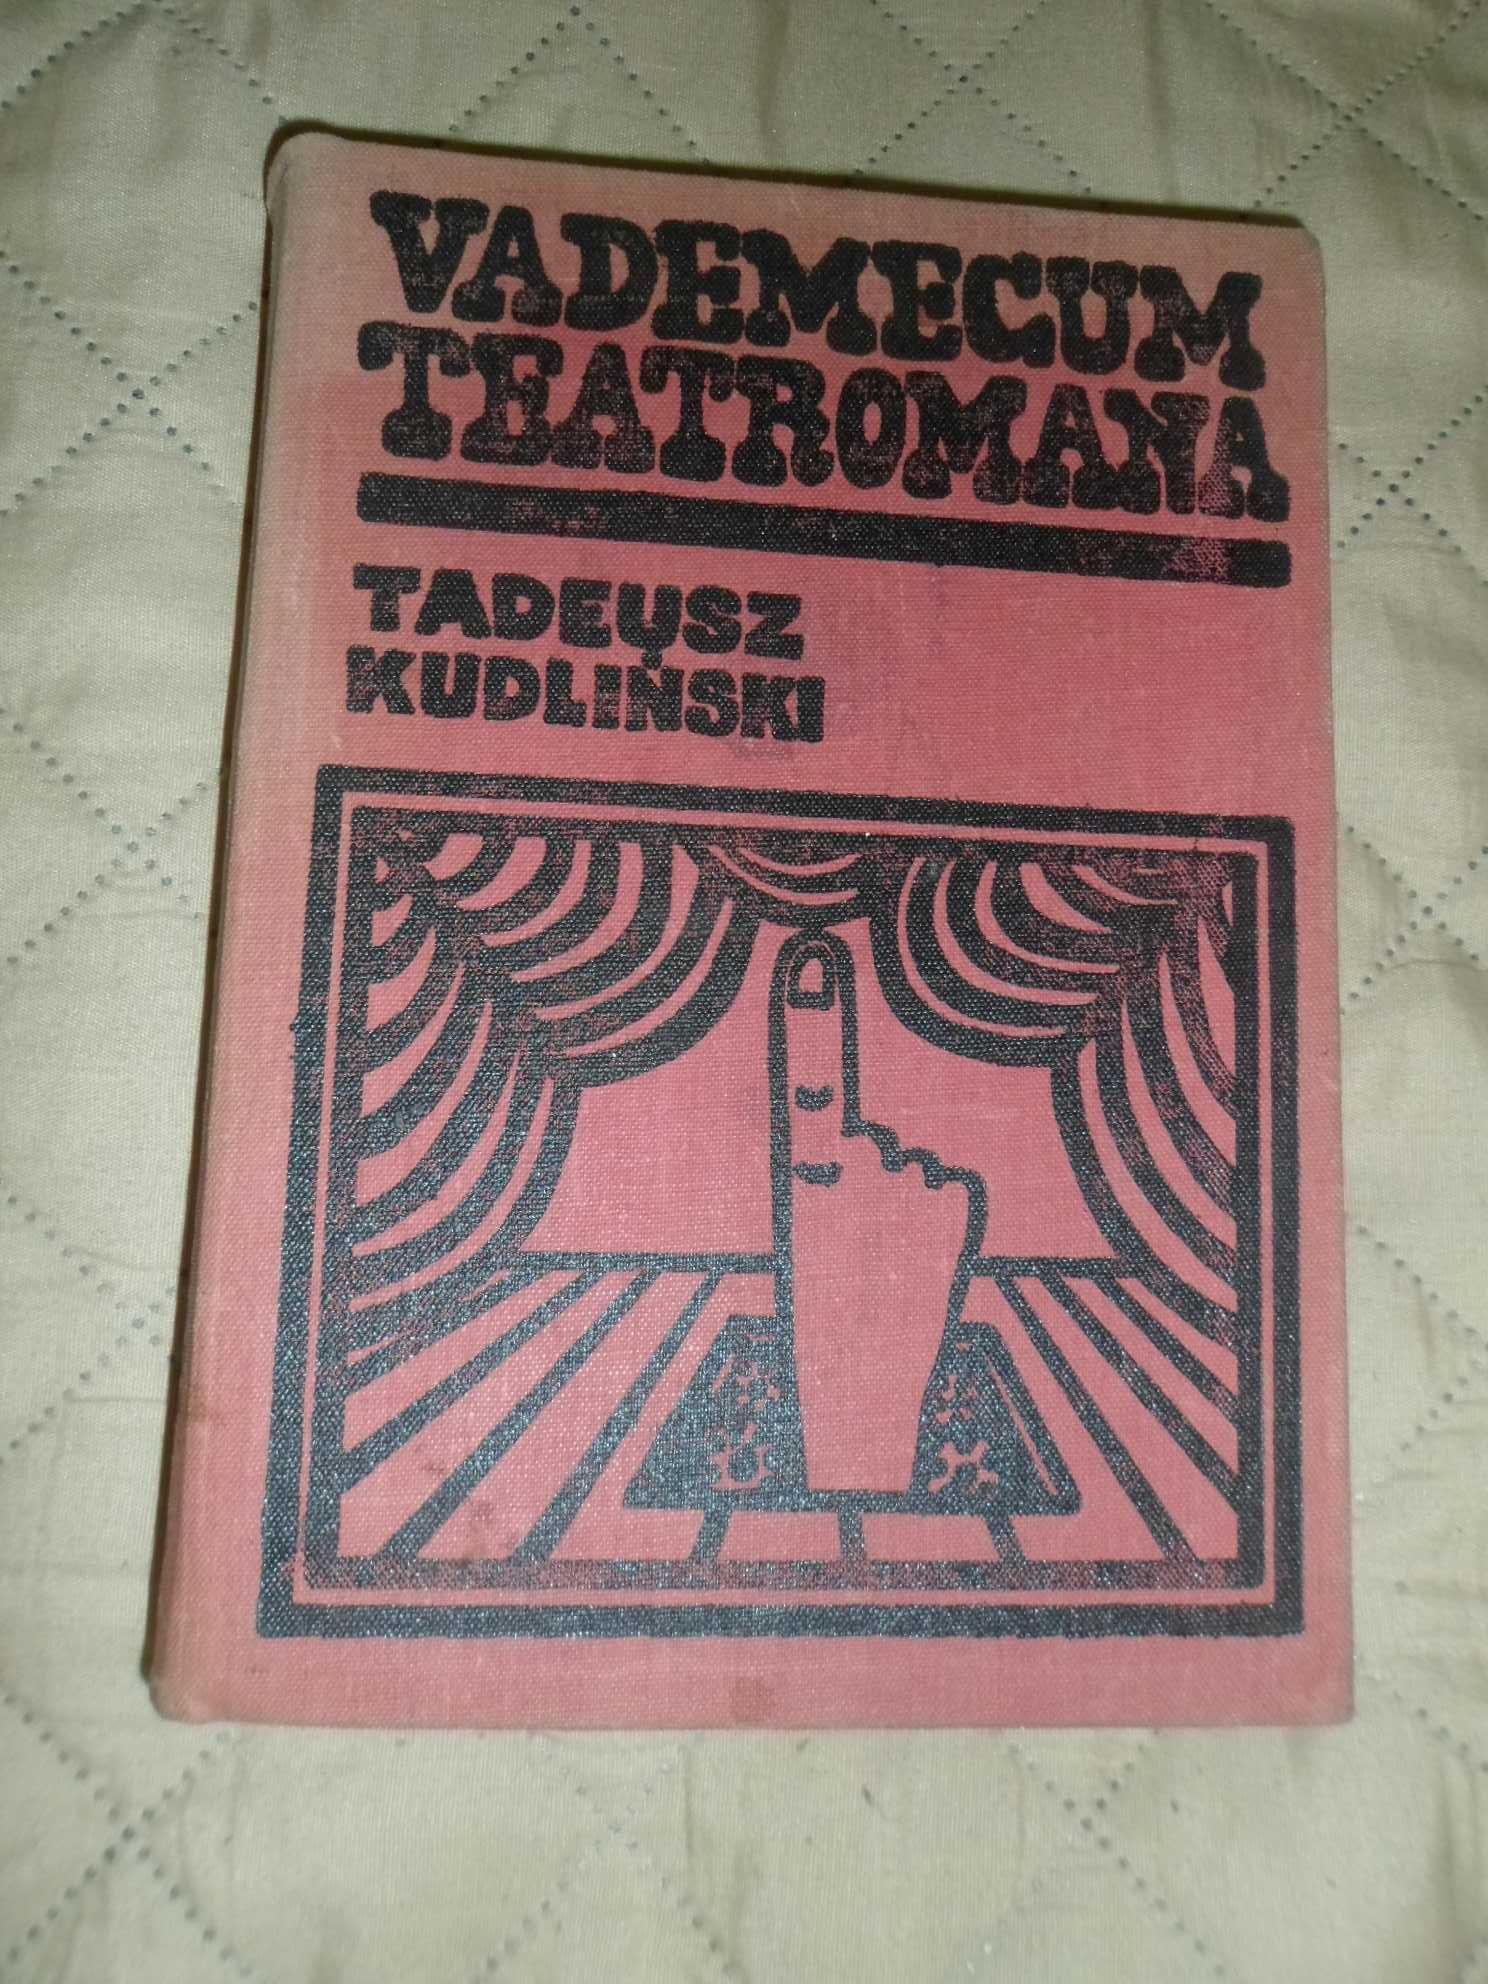 Tadeusz Kudliński - Vademecum Teatromana